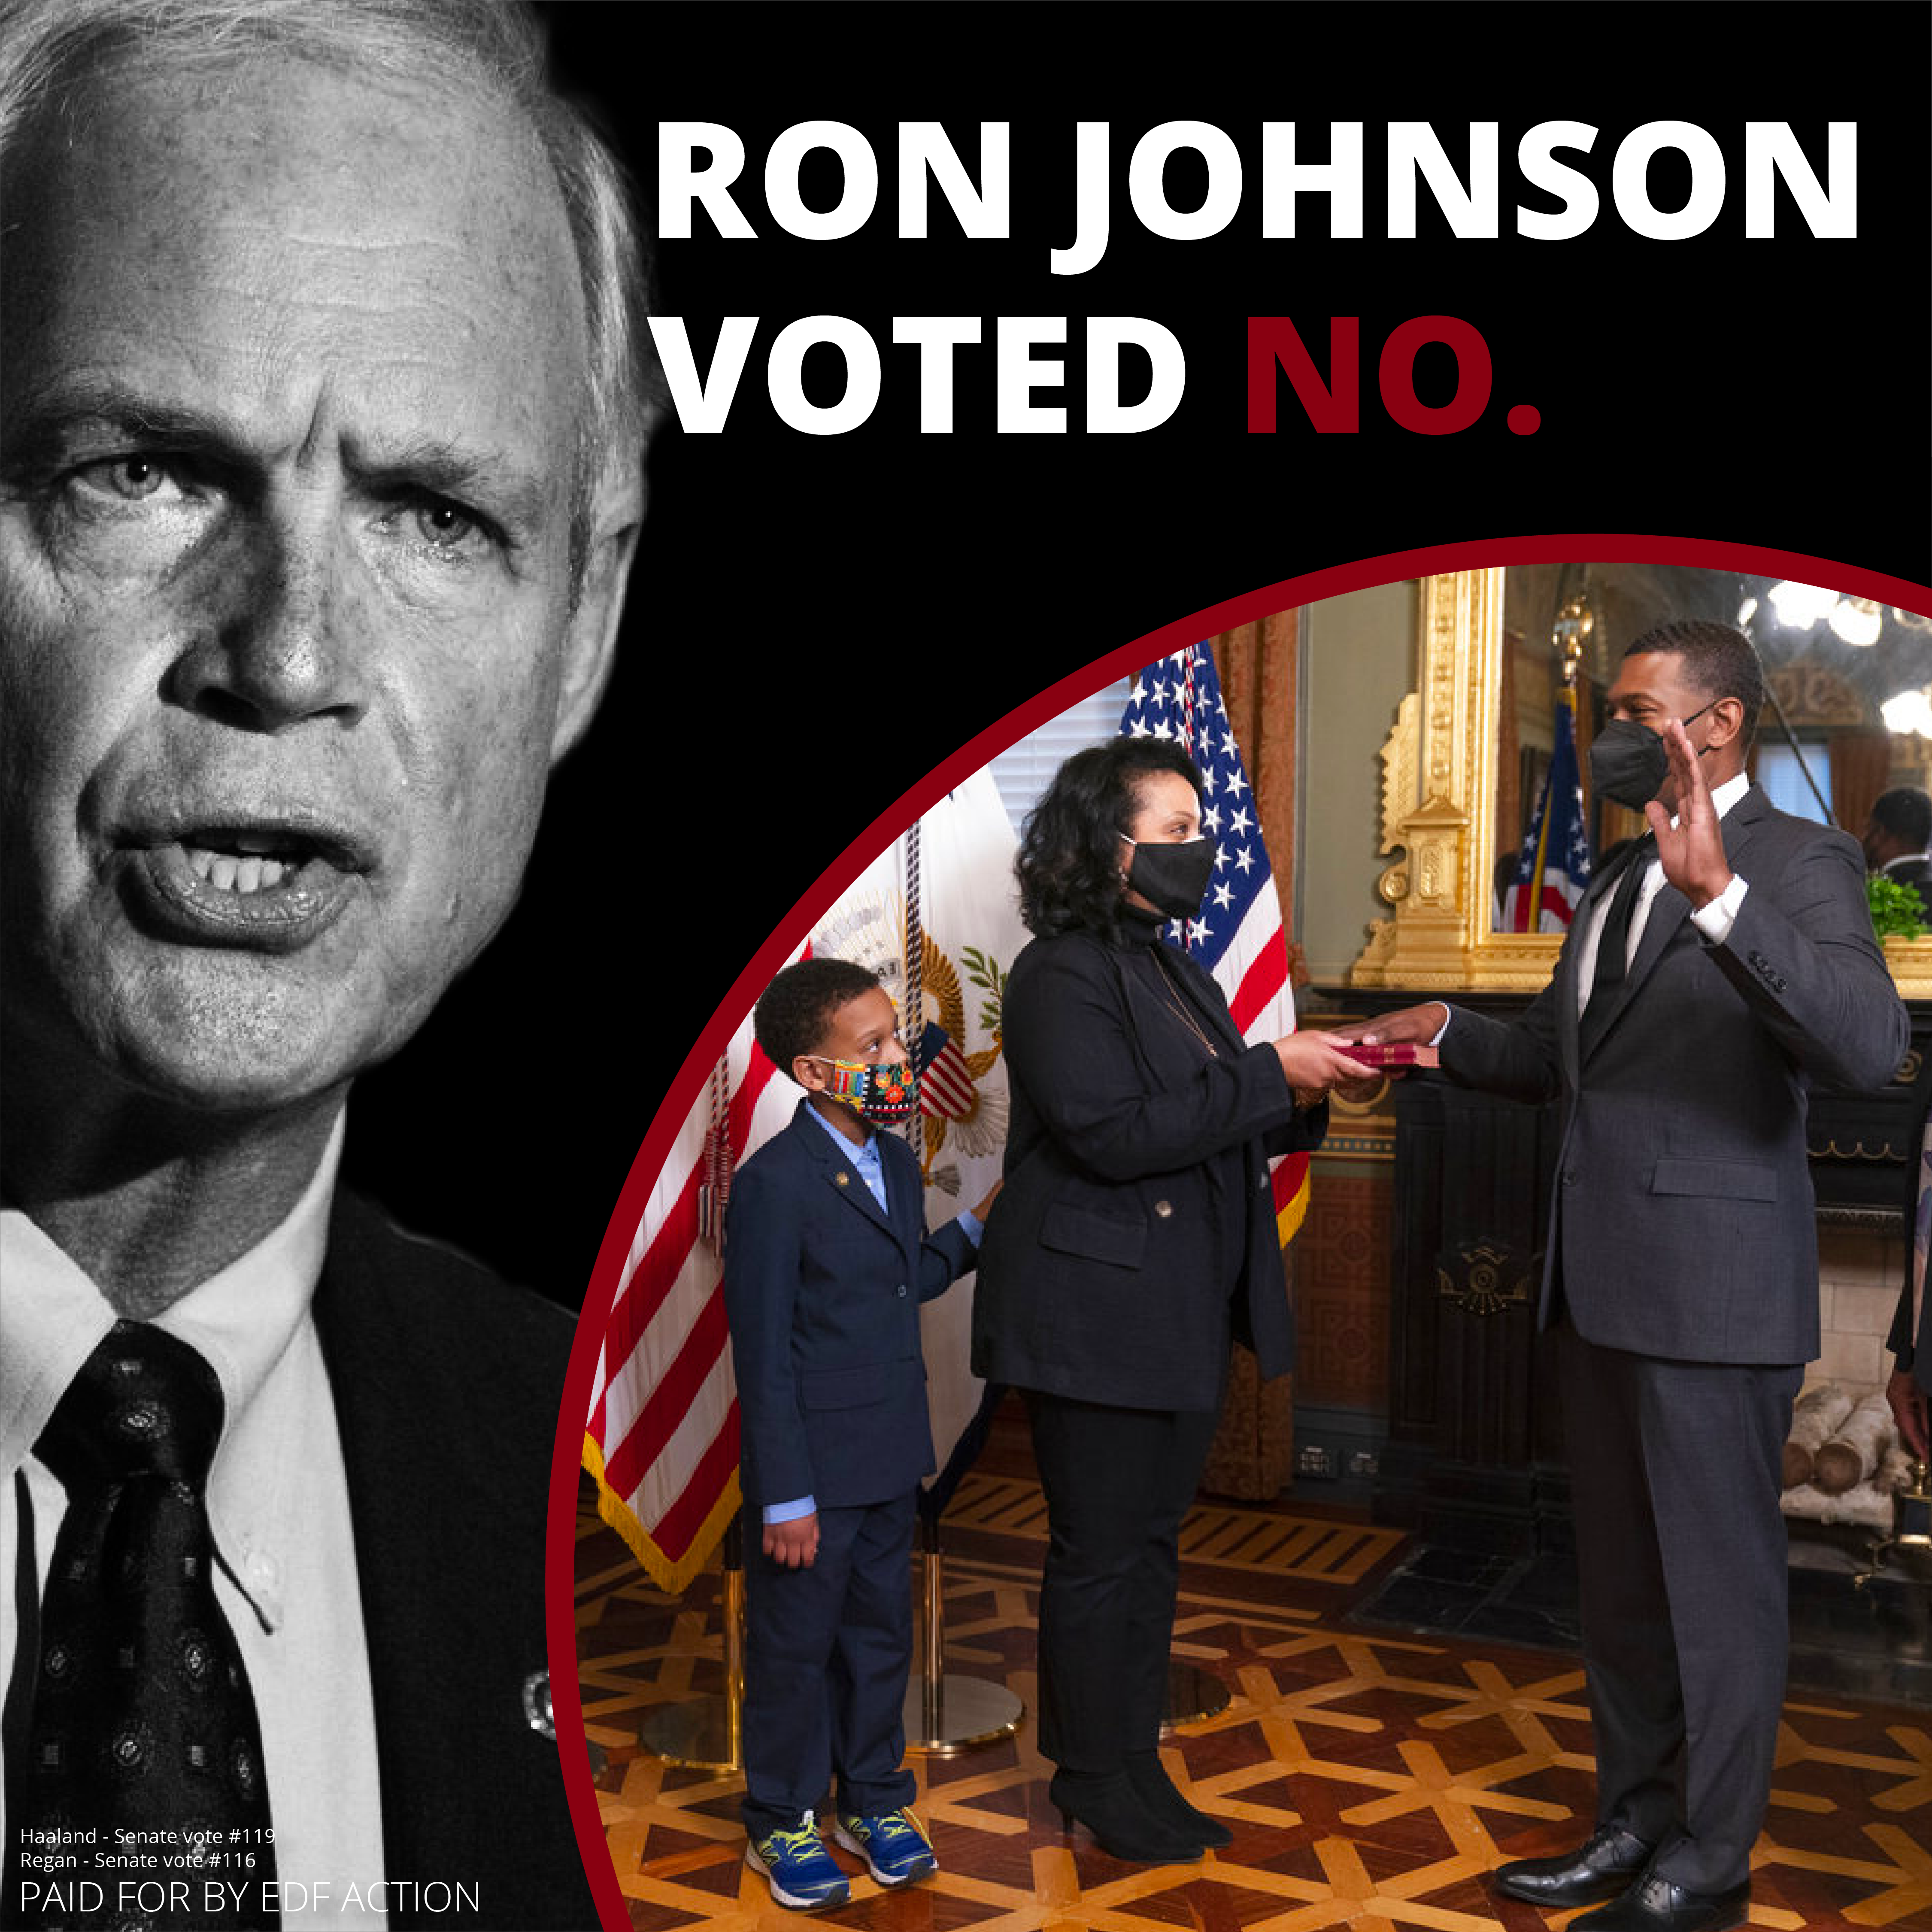 Johnson Voted No for Regan Nomination 